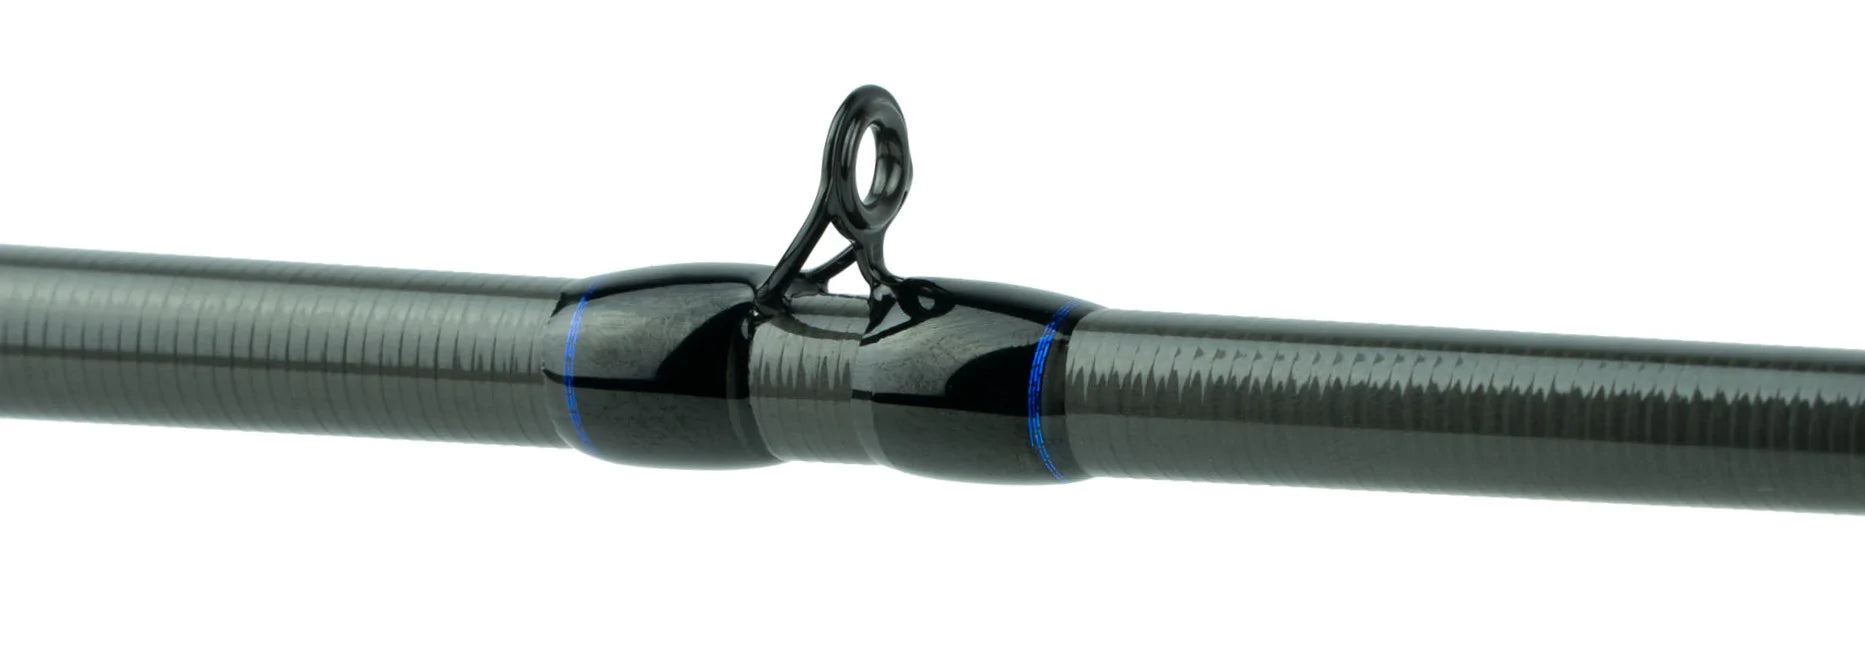 6th Sense Milliken Series Fishing Rods 7'4 Heavy/Mod Fast